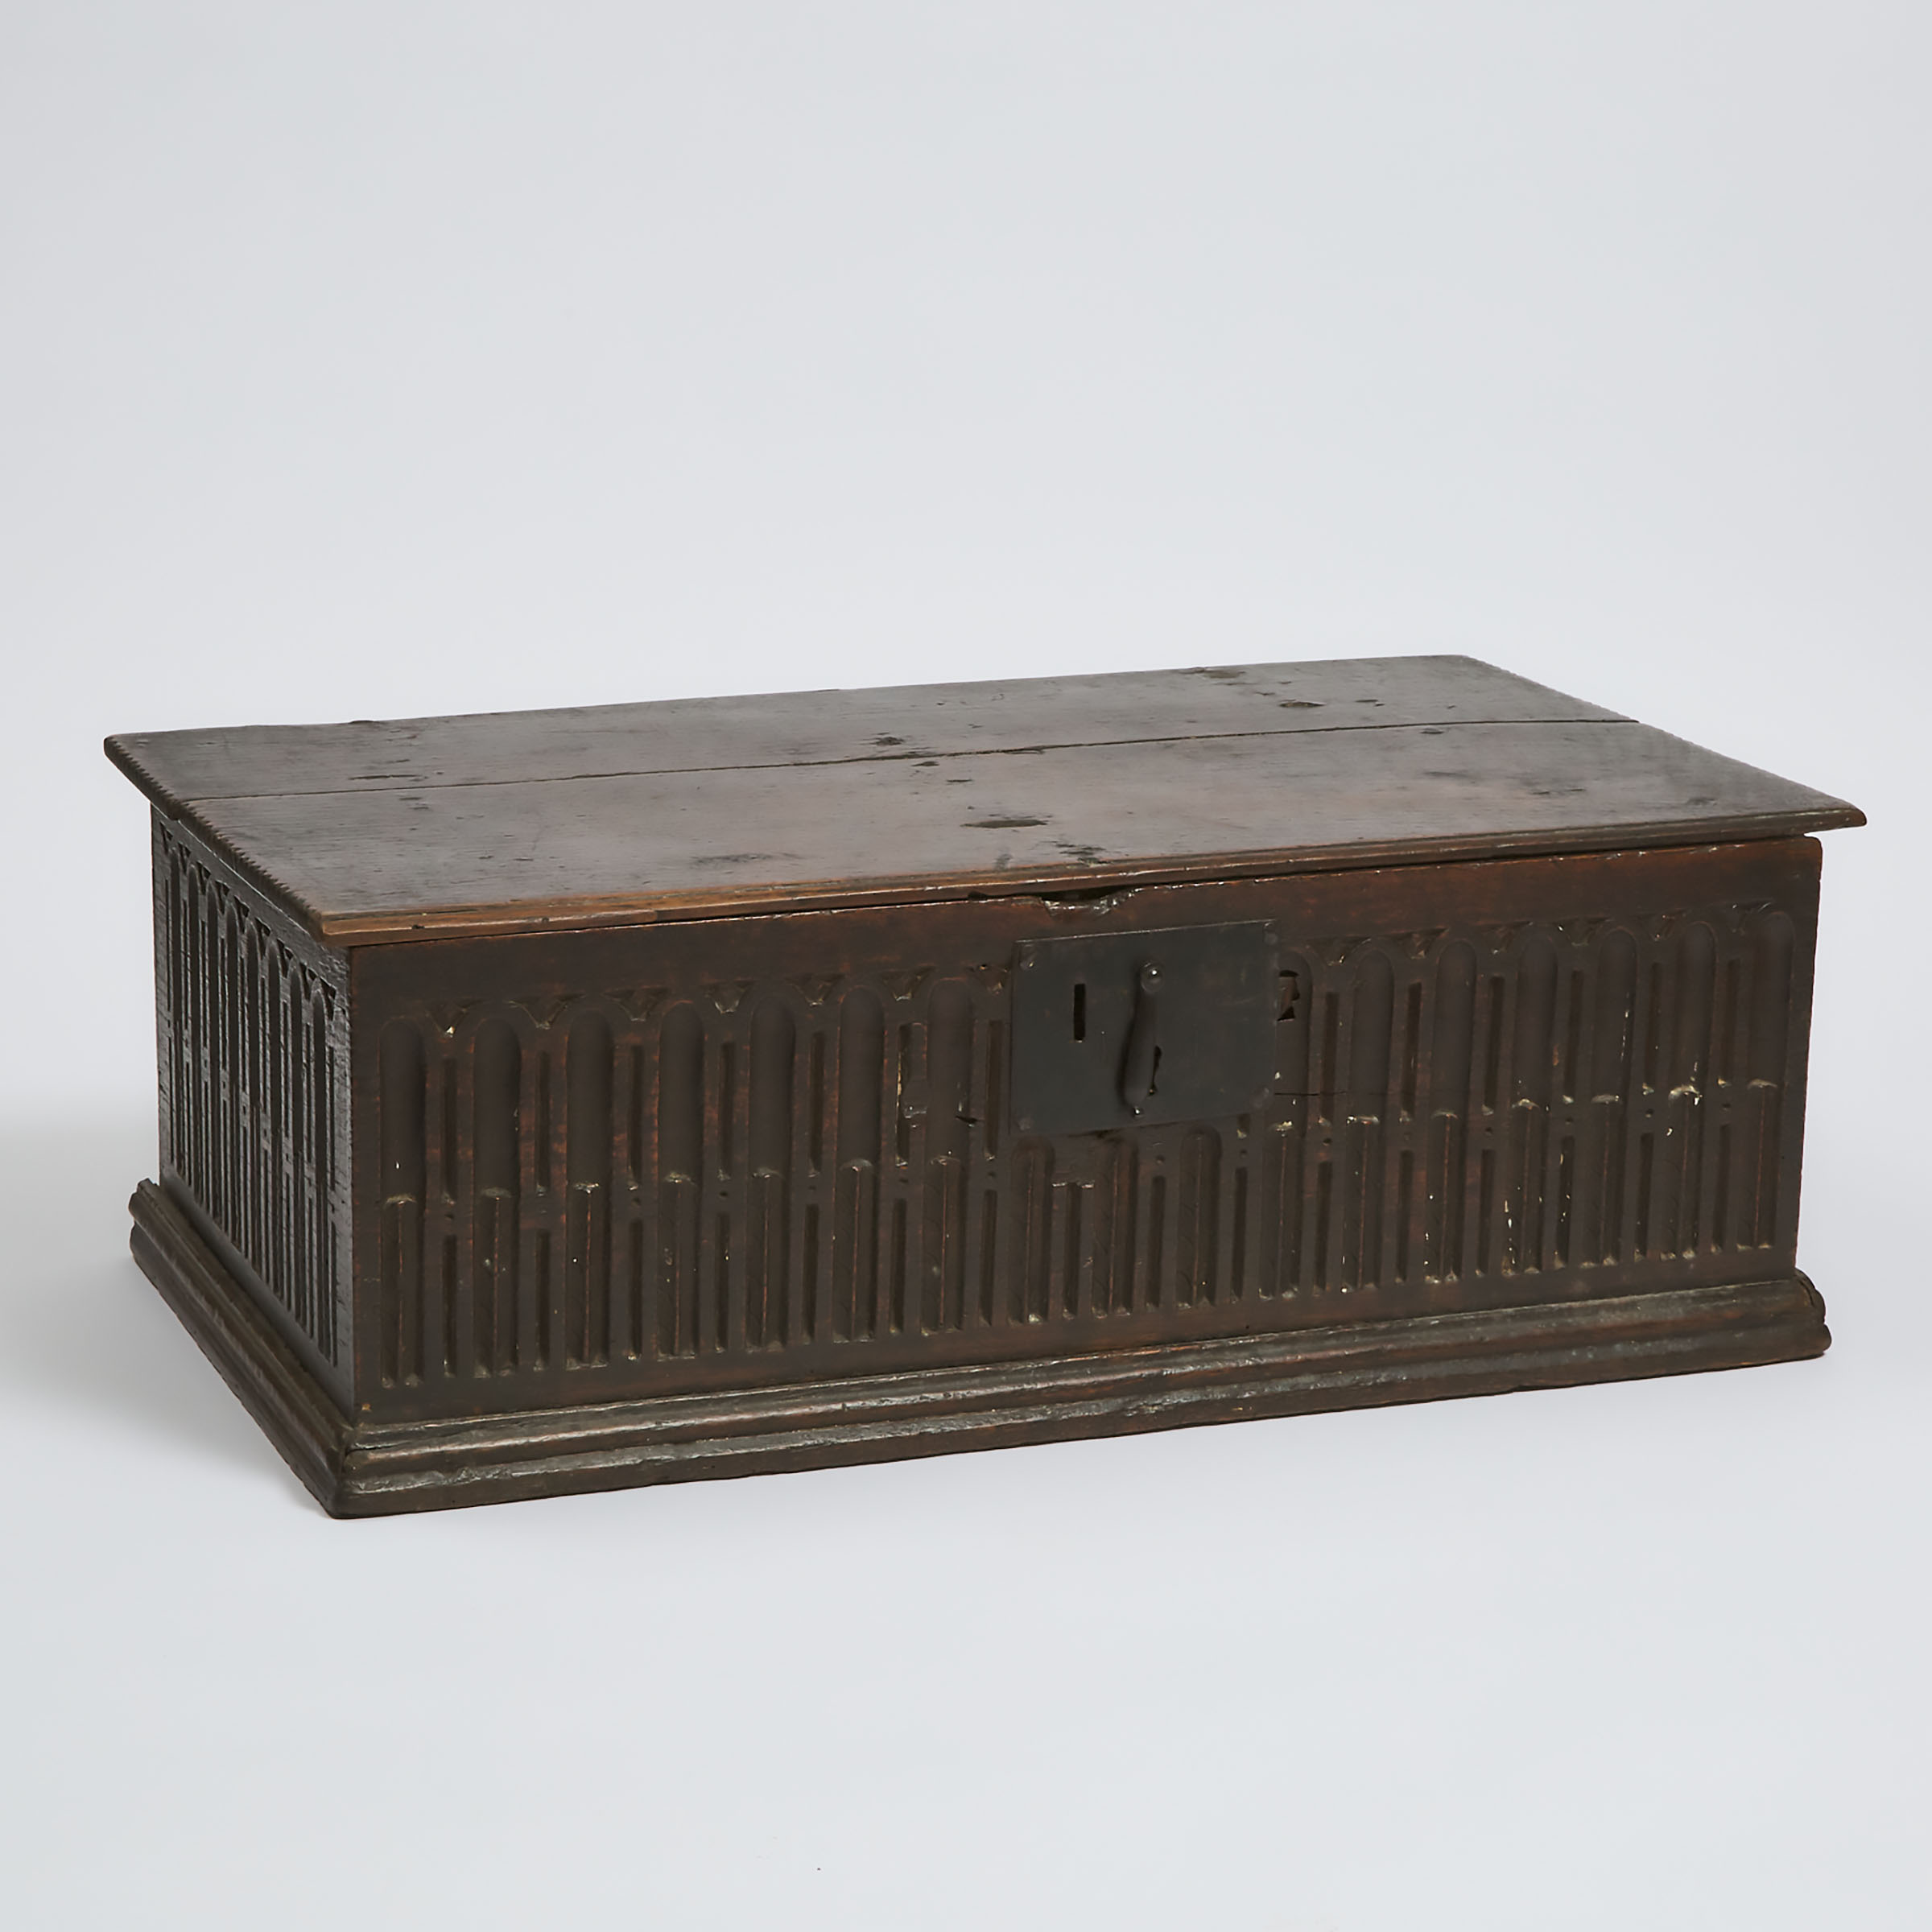 English Oak Document Box, 17th century